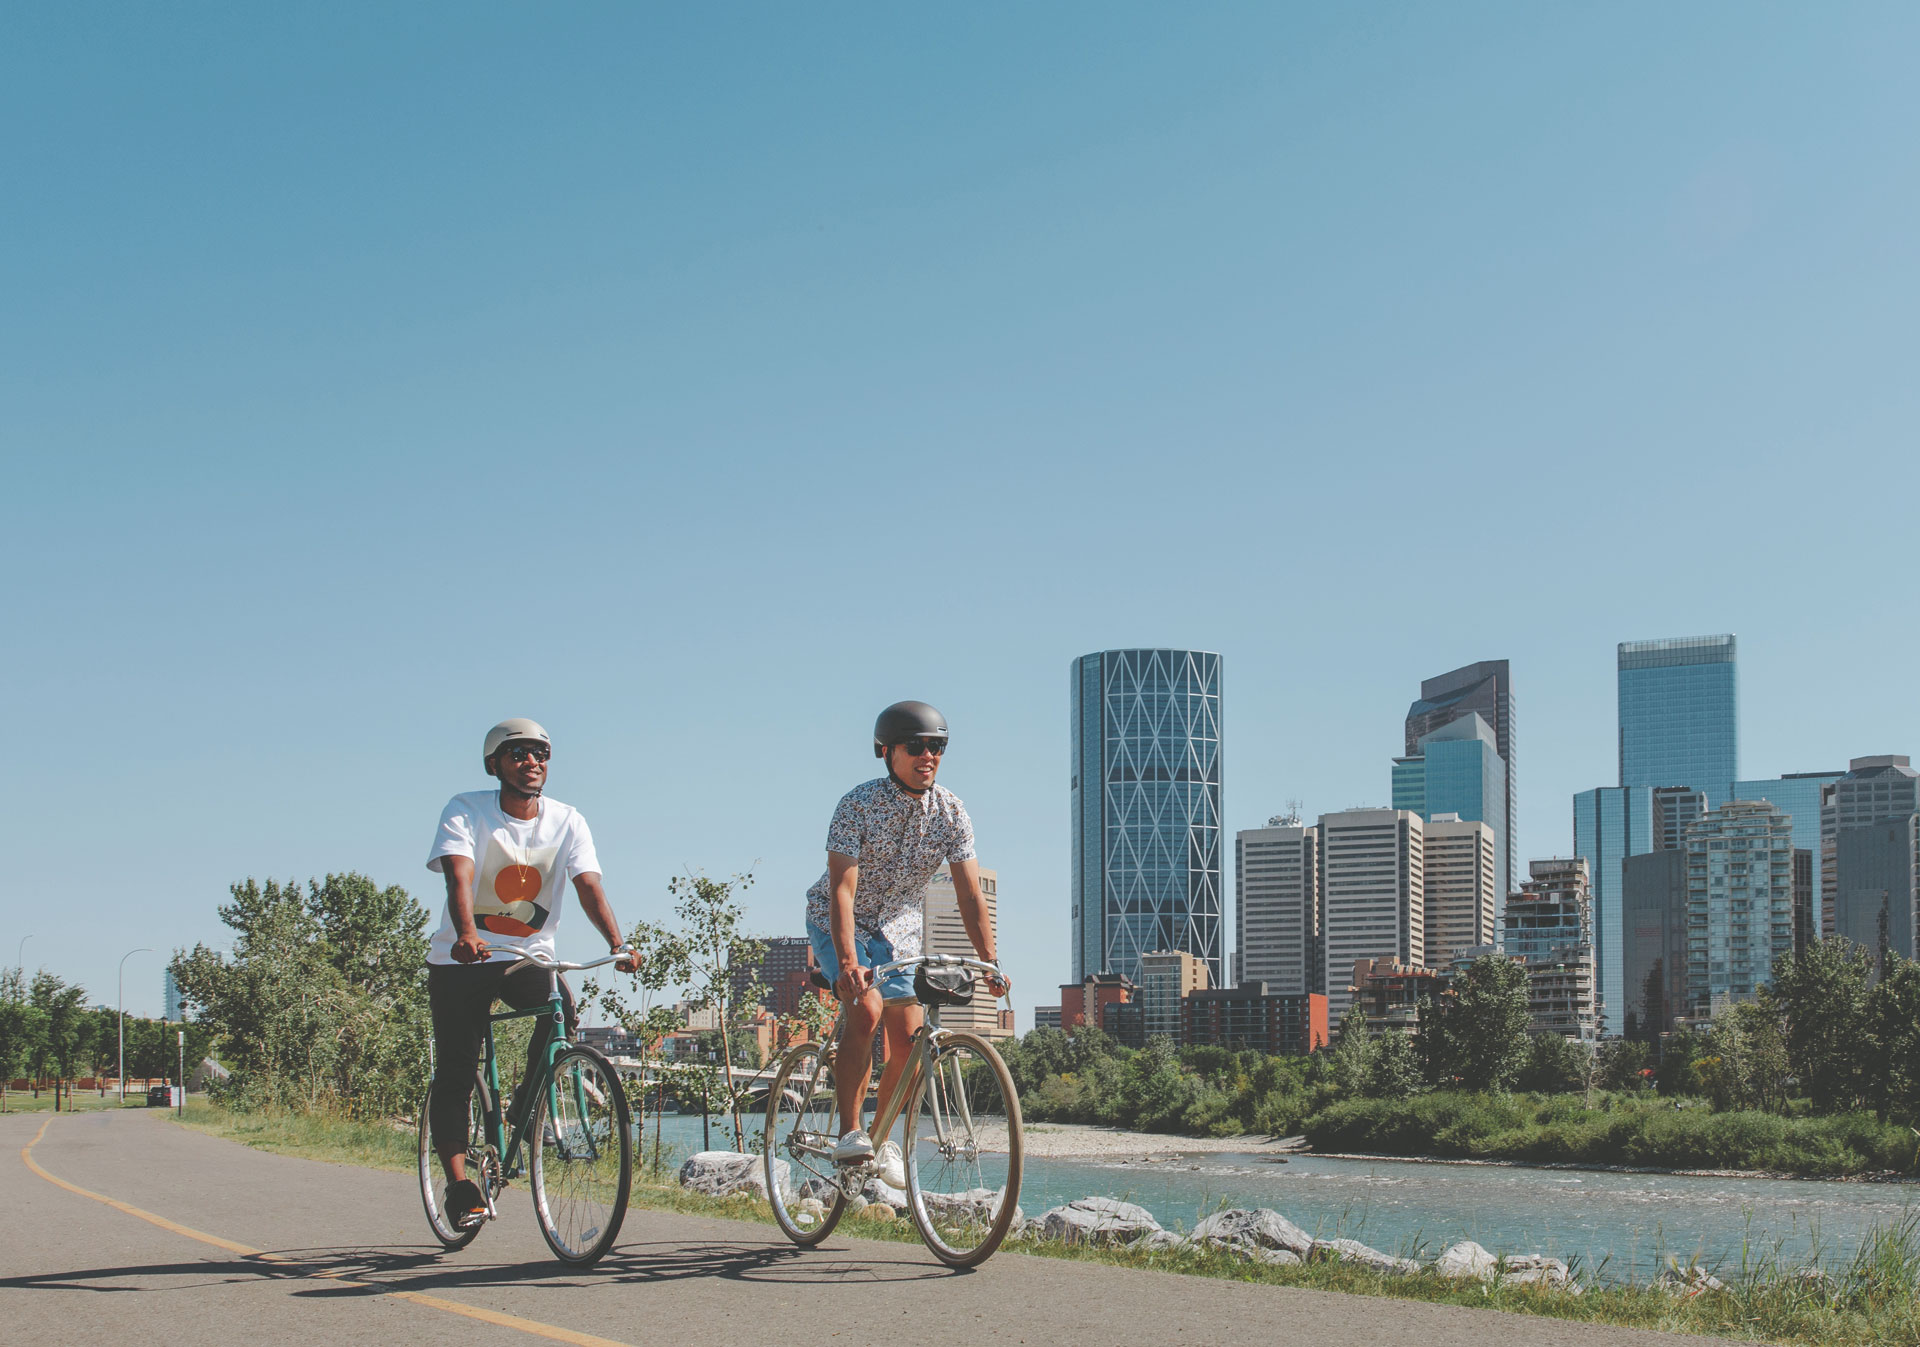 Exploring Calgary by bike